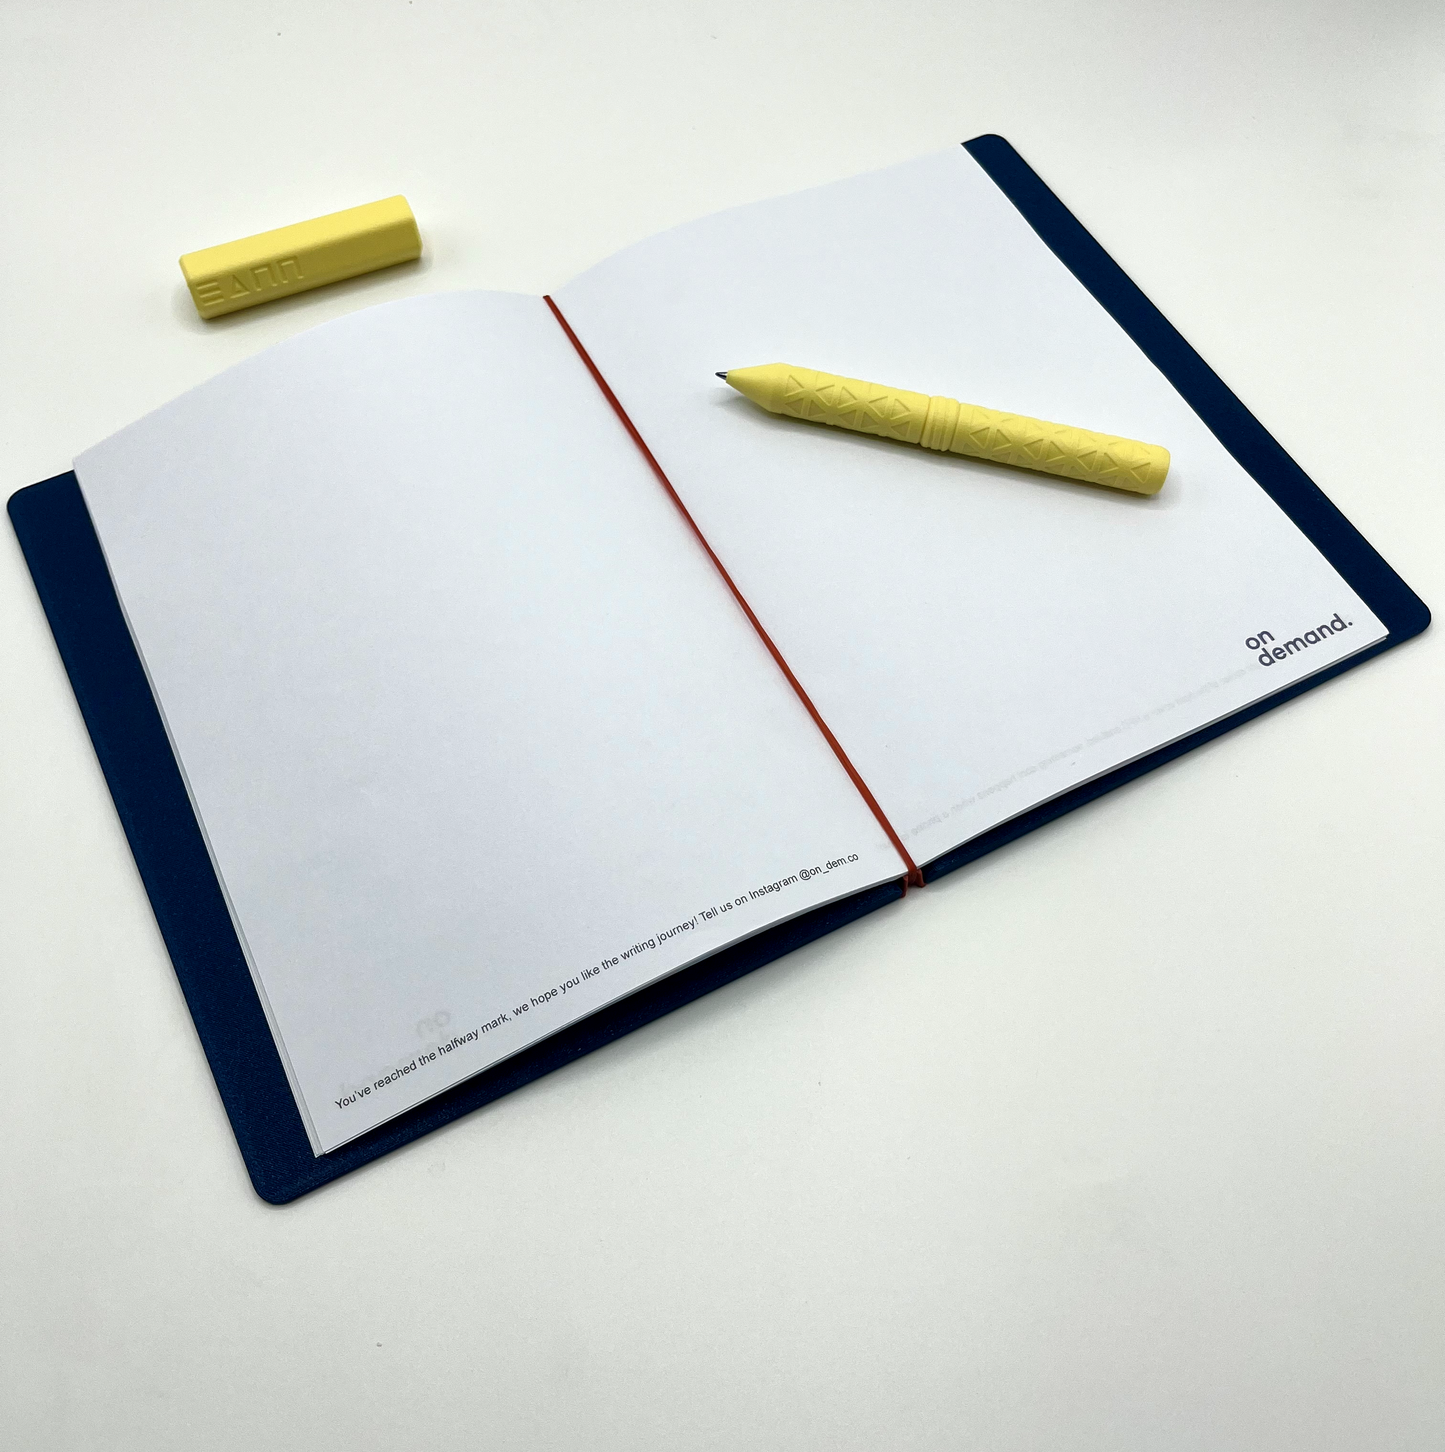 The Smart Notebook